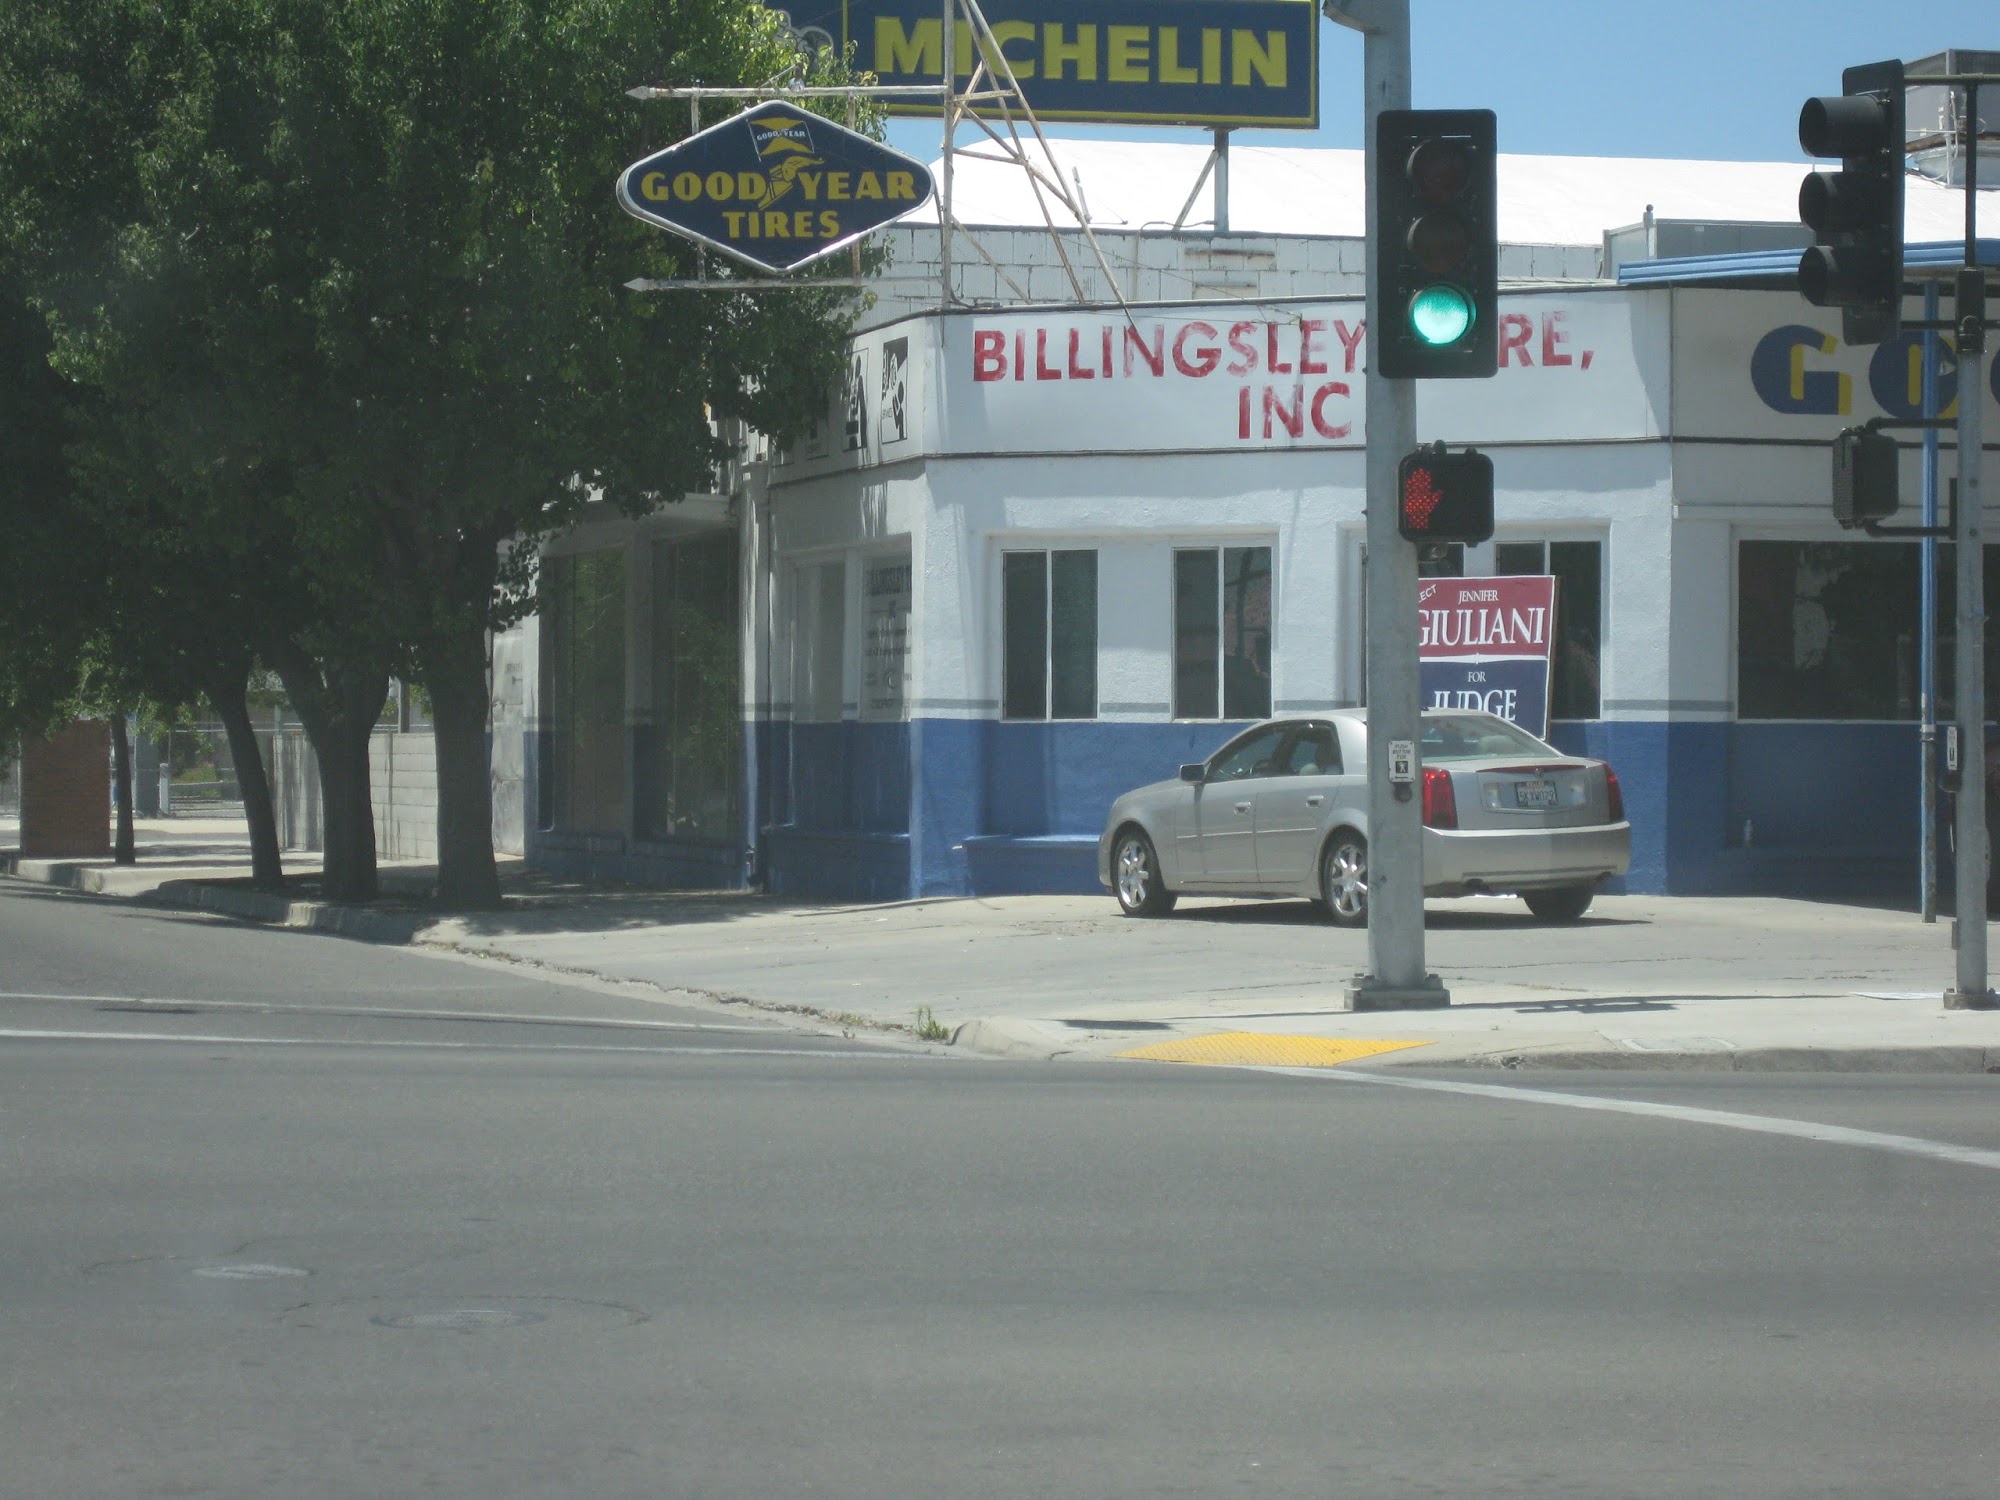 Billingsley Tire Inc.